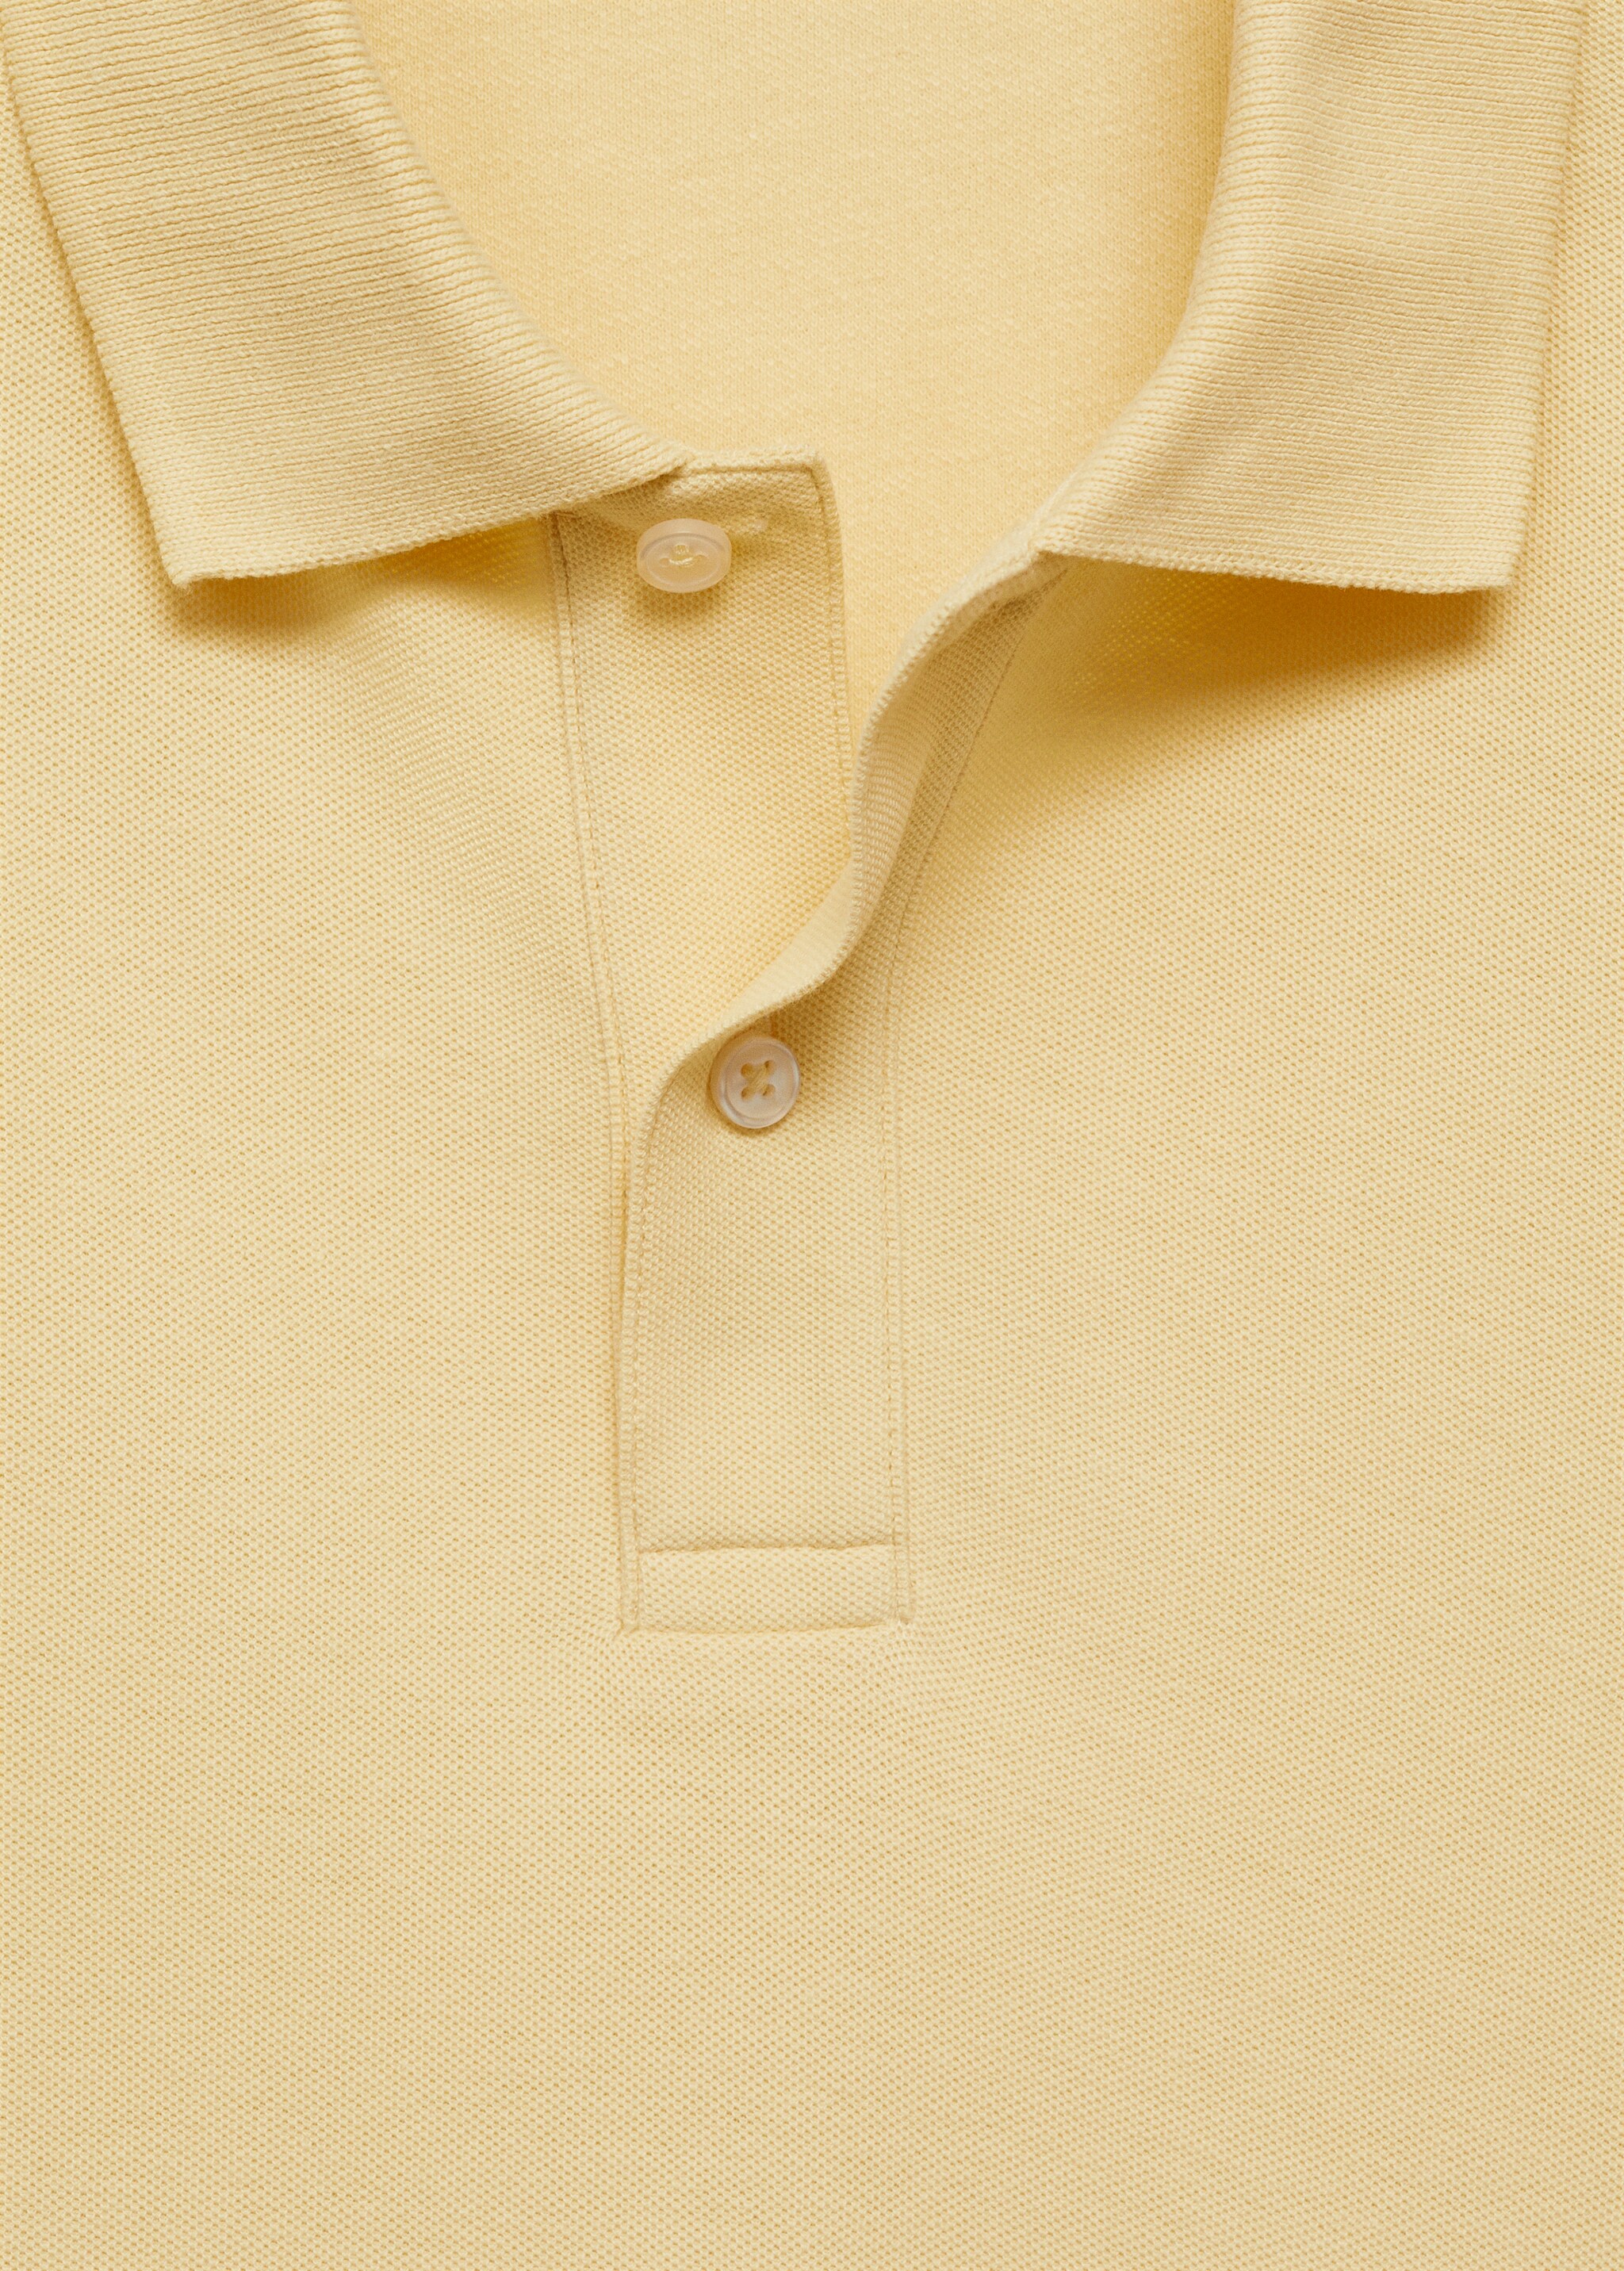 100% cotton pique polo shirt - Details of the article 8